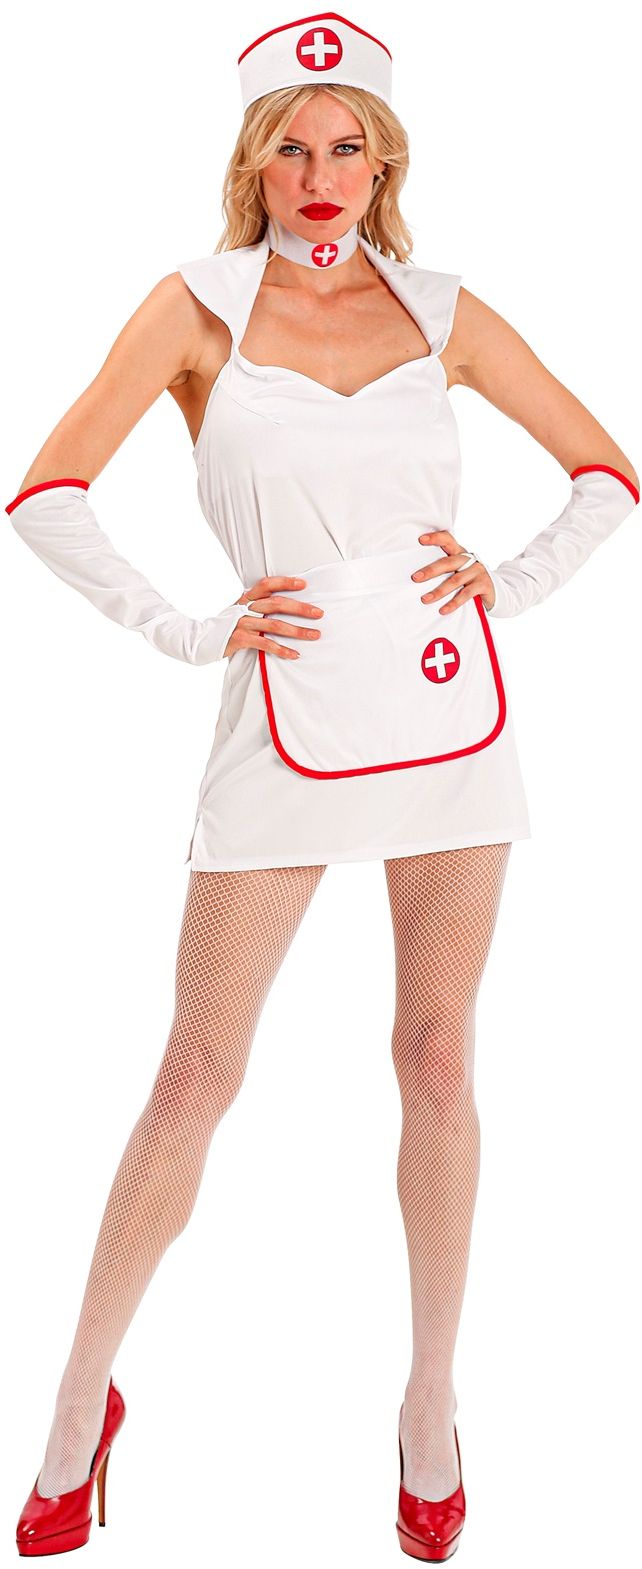 Verpleegster kostuum